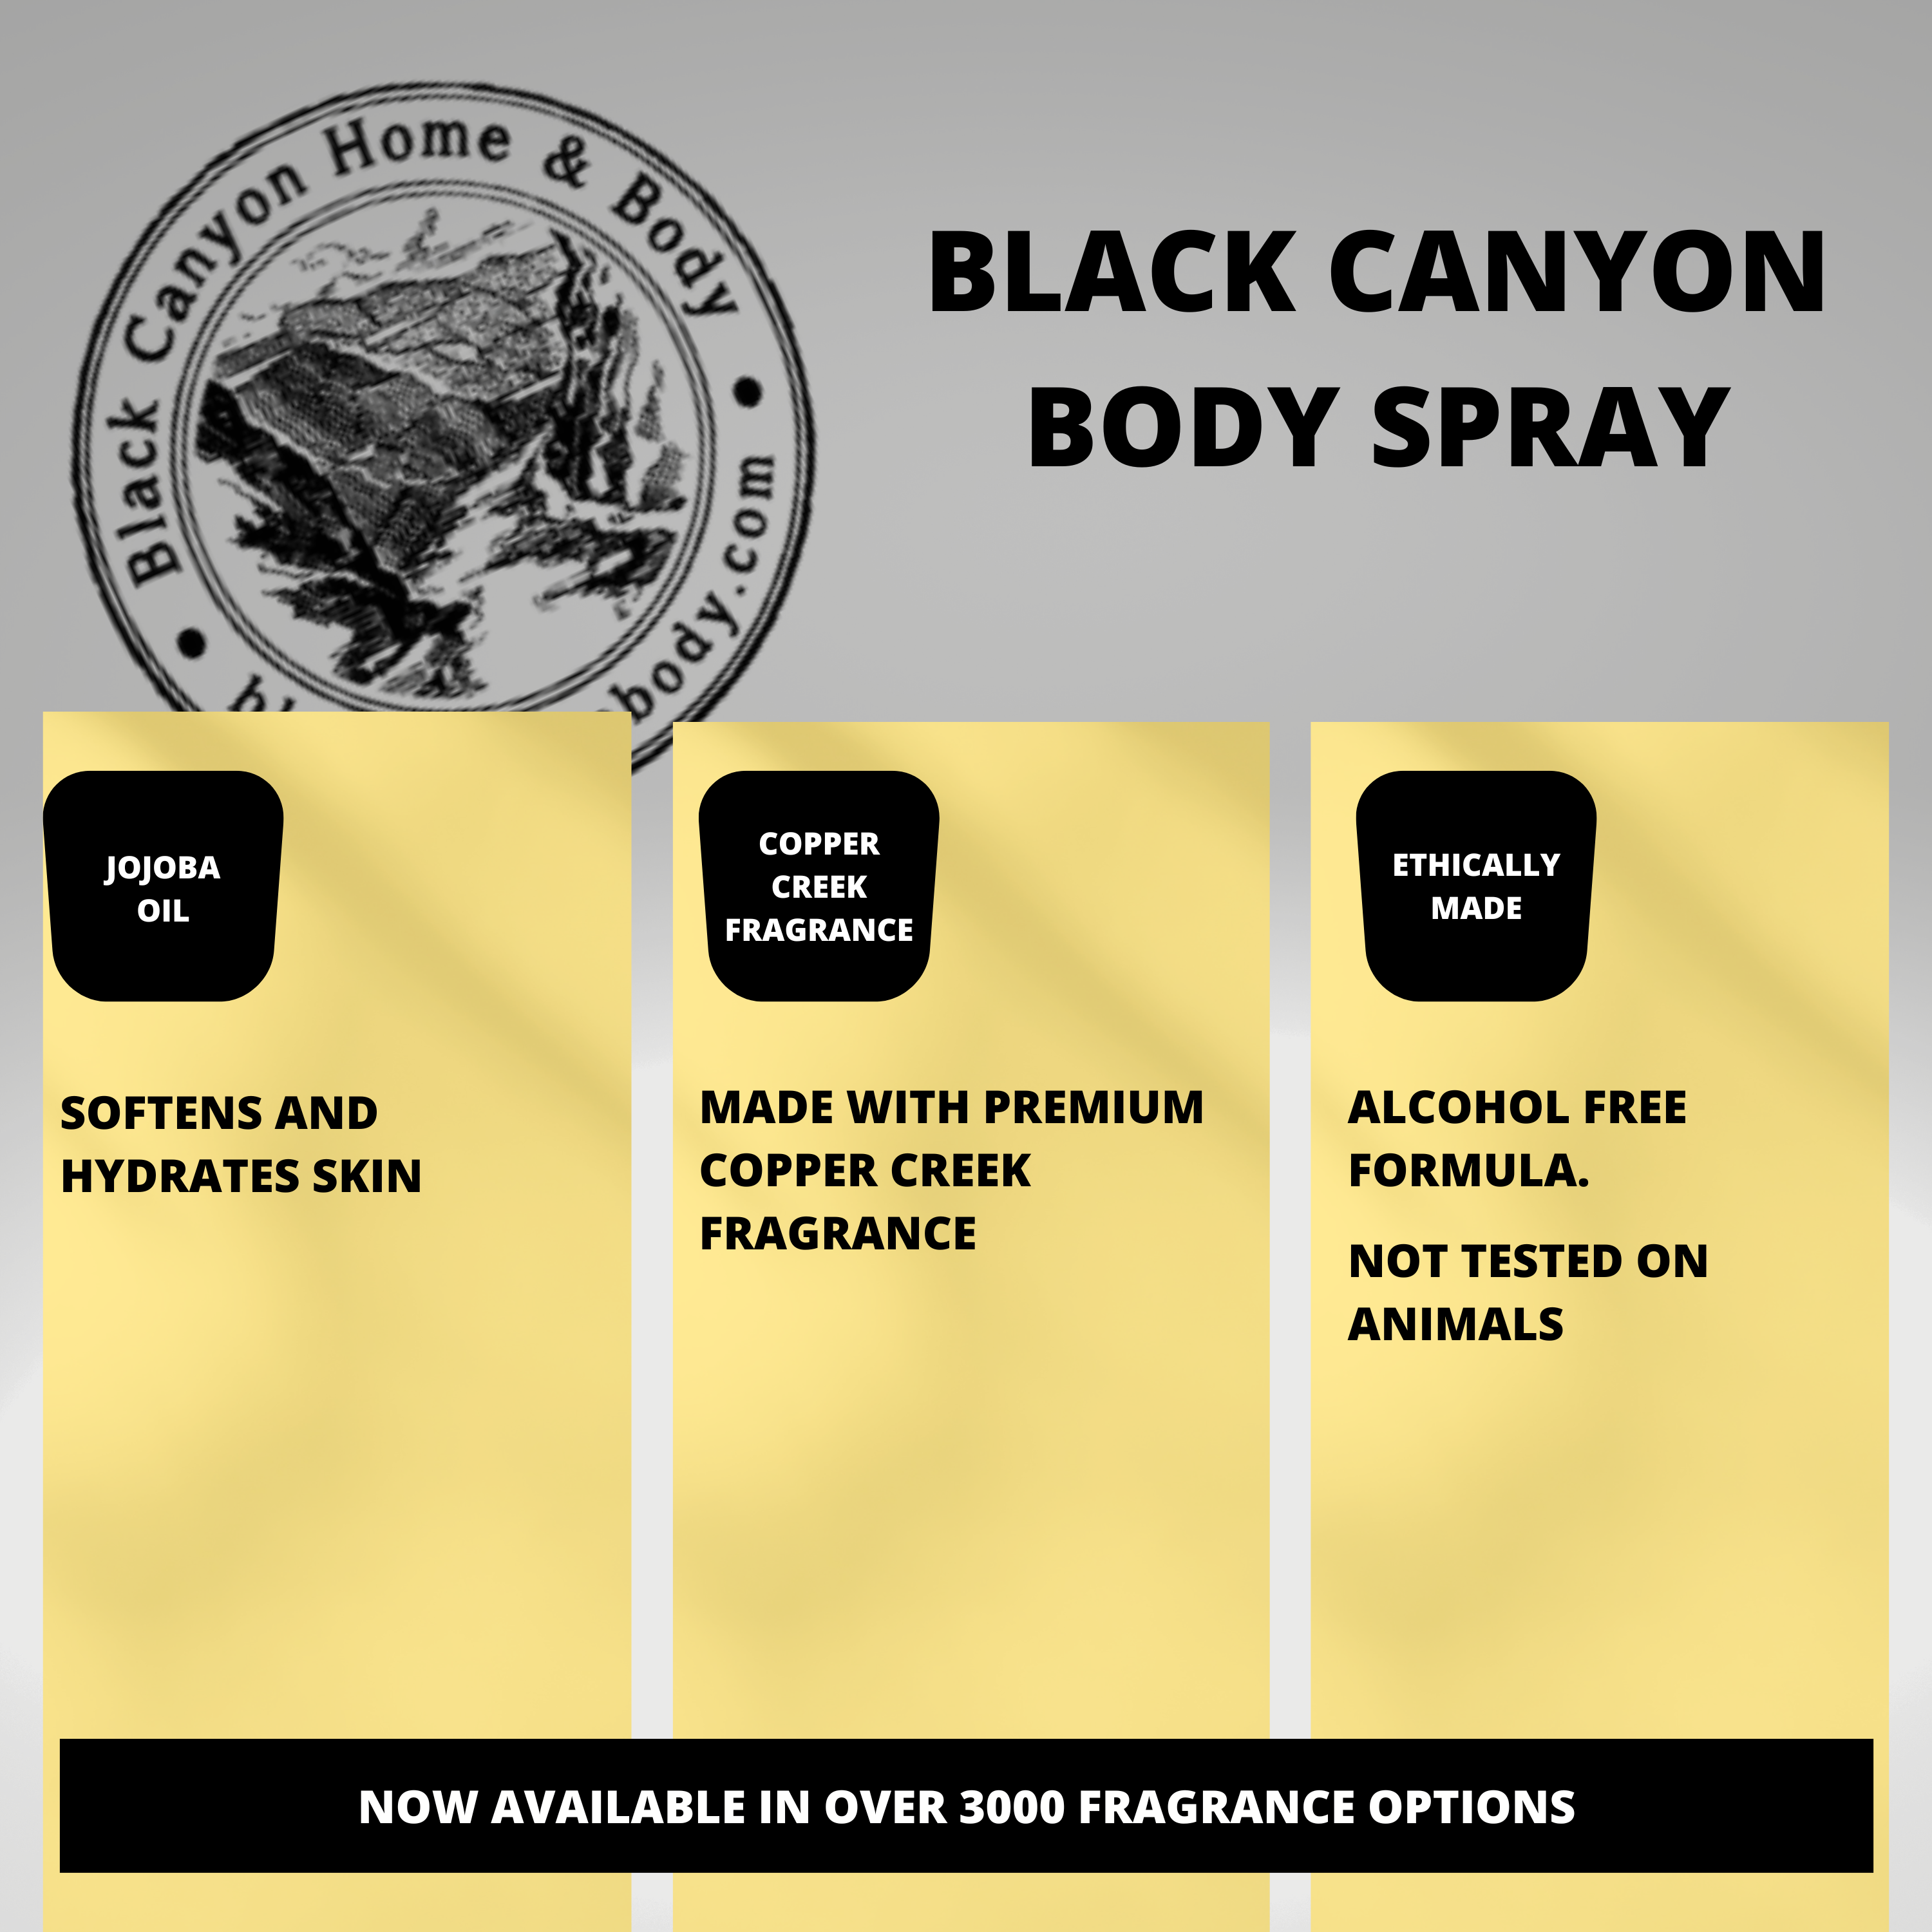 Black Canyon Pumpkin & Acorns Scented Body Spray